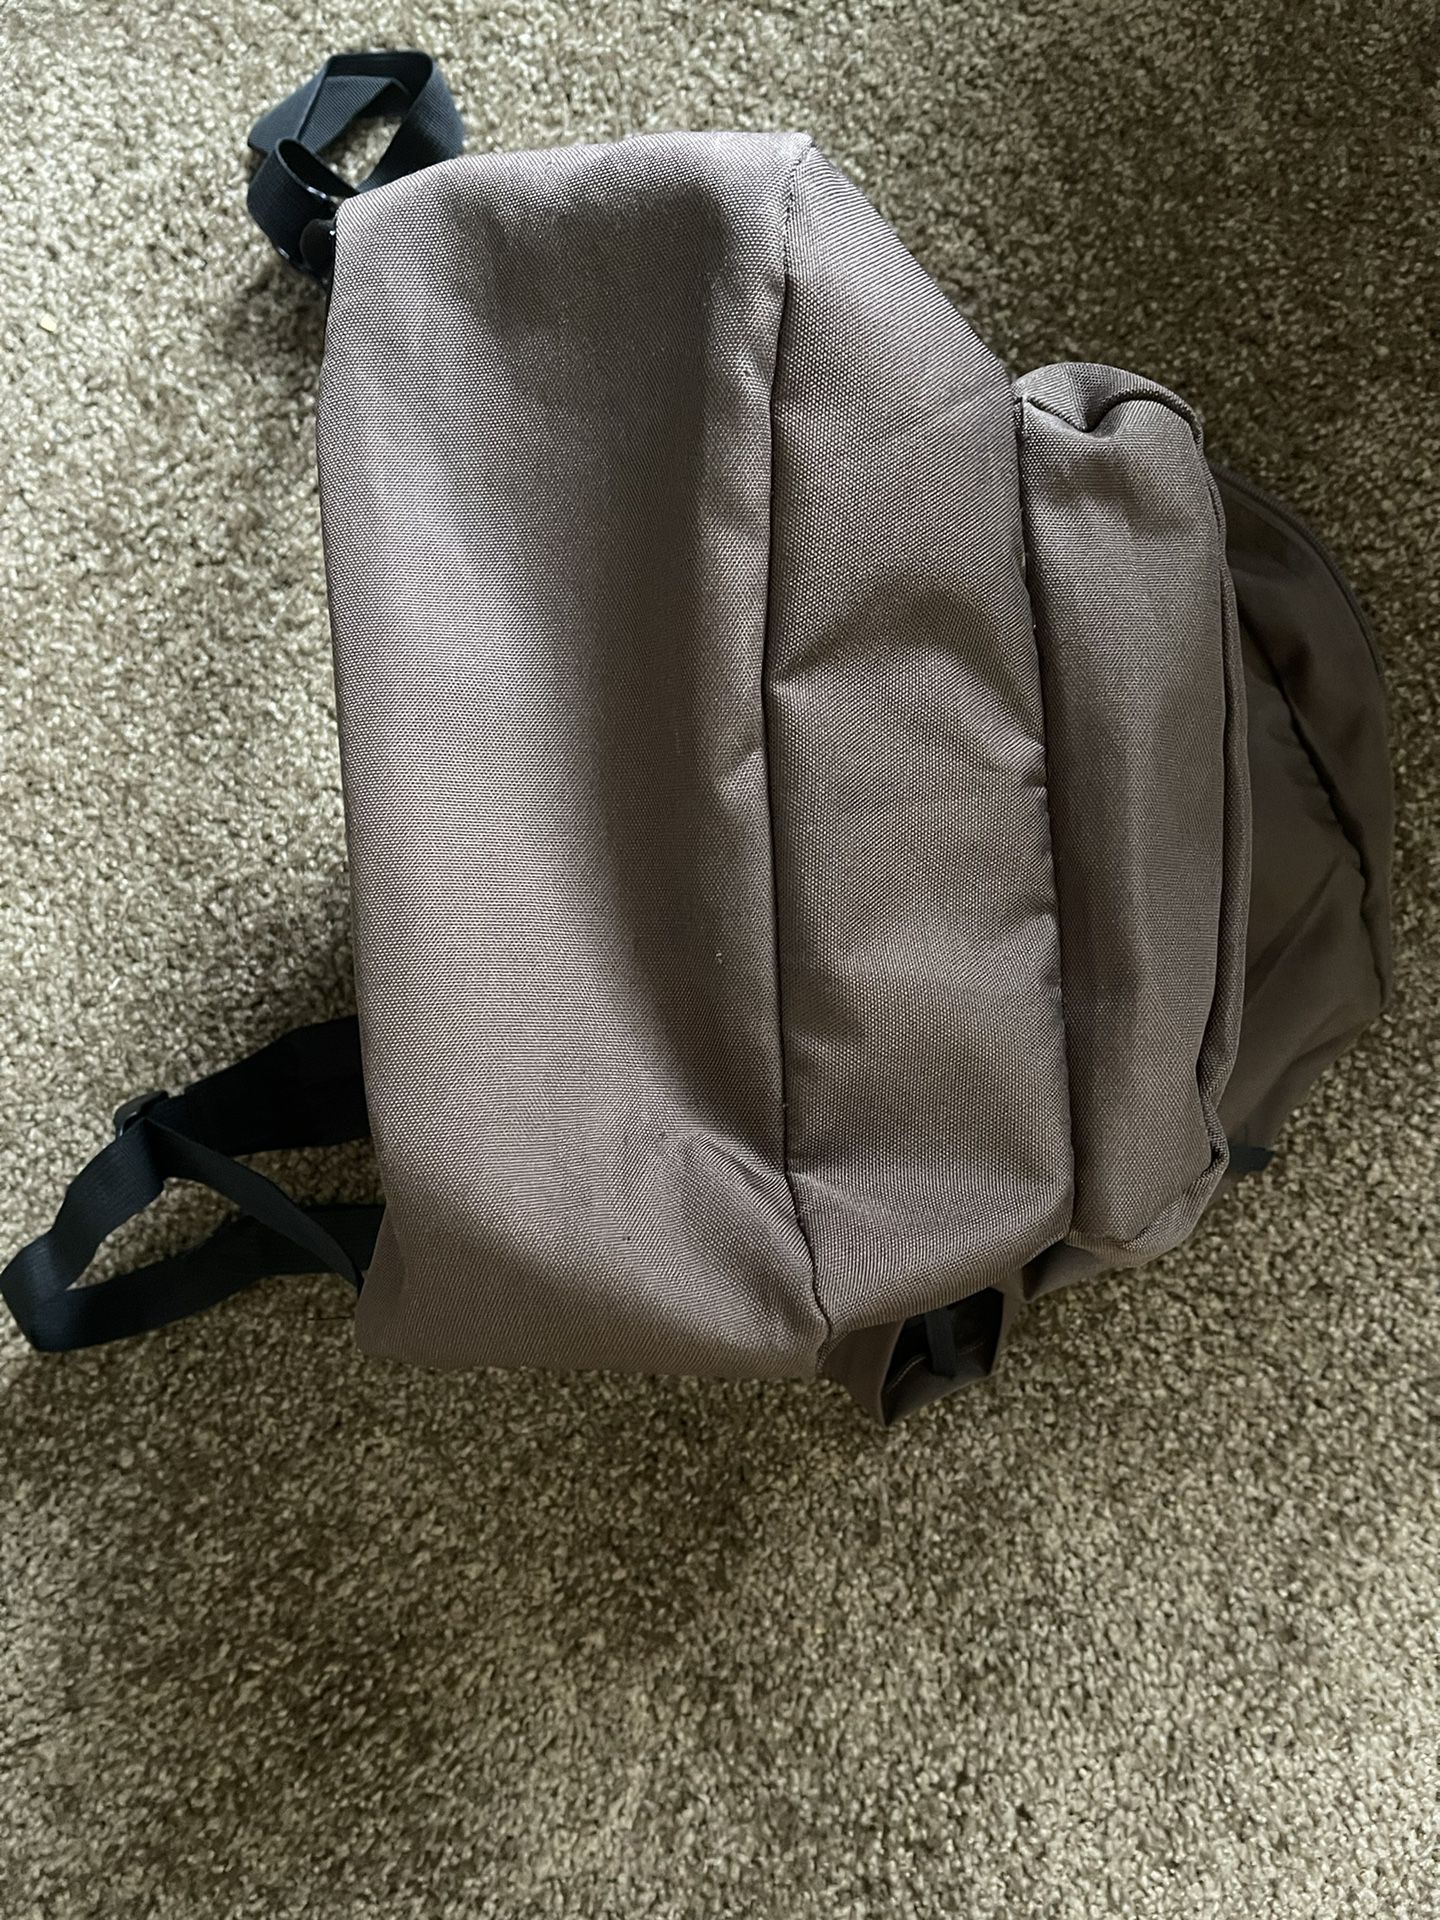 Backpack arrived today : r/travisscott